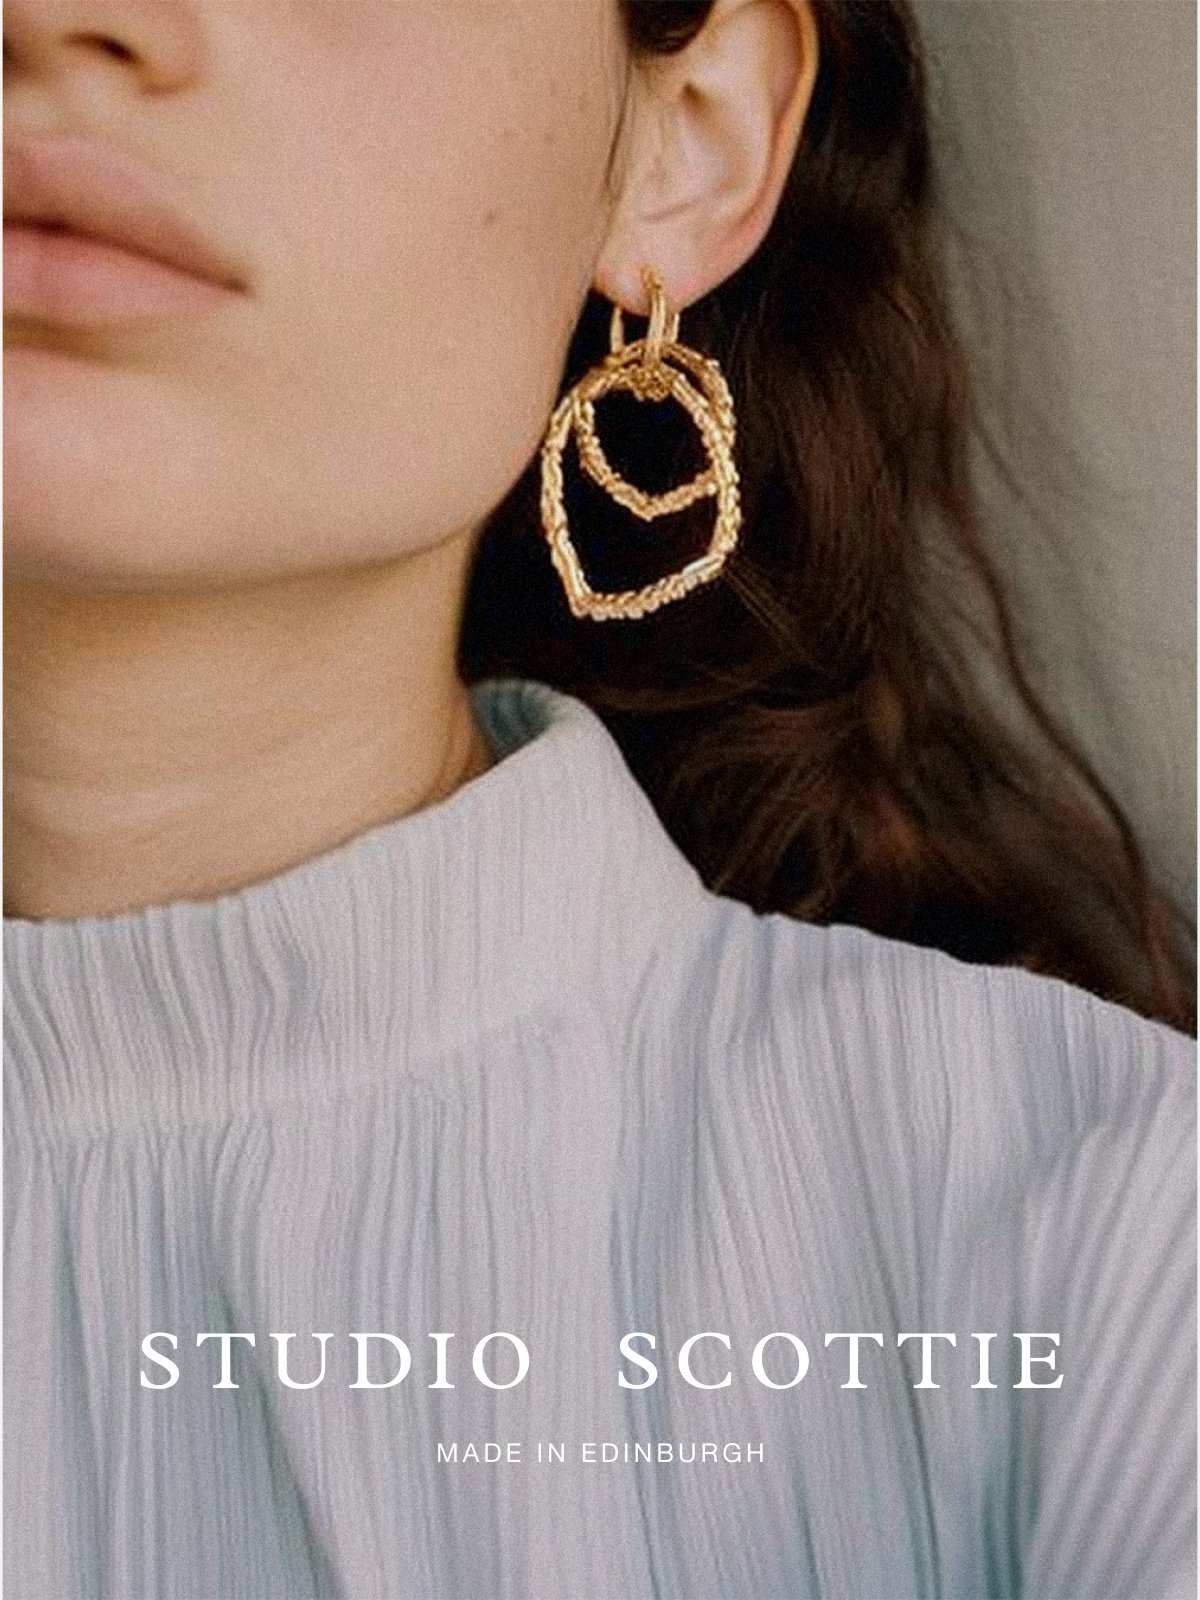 studio scottie jewelry branding.jpg